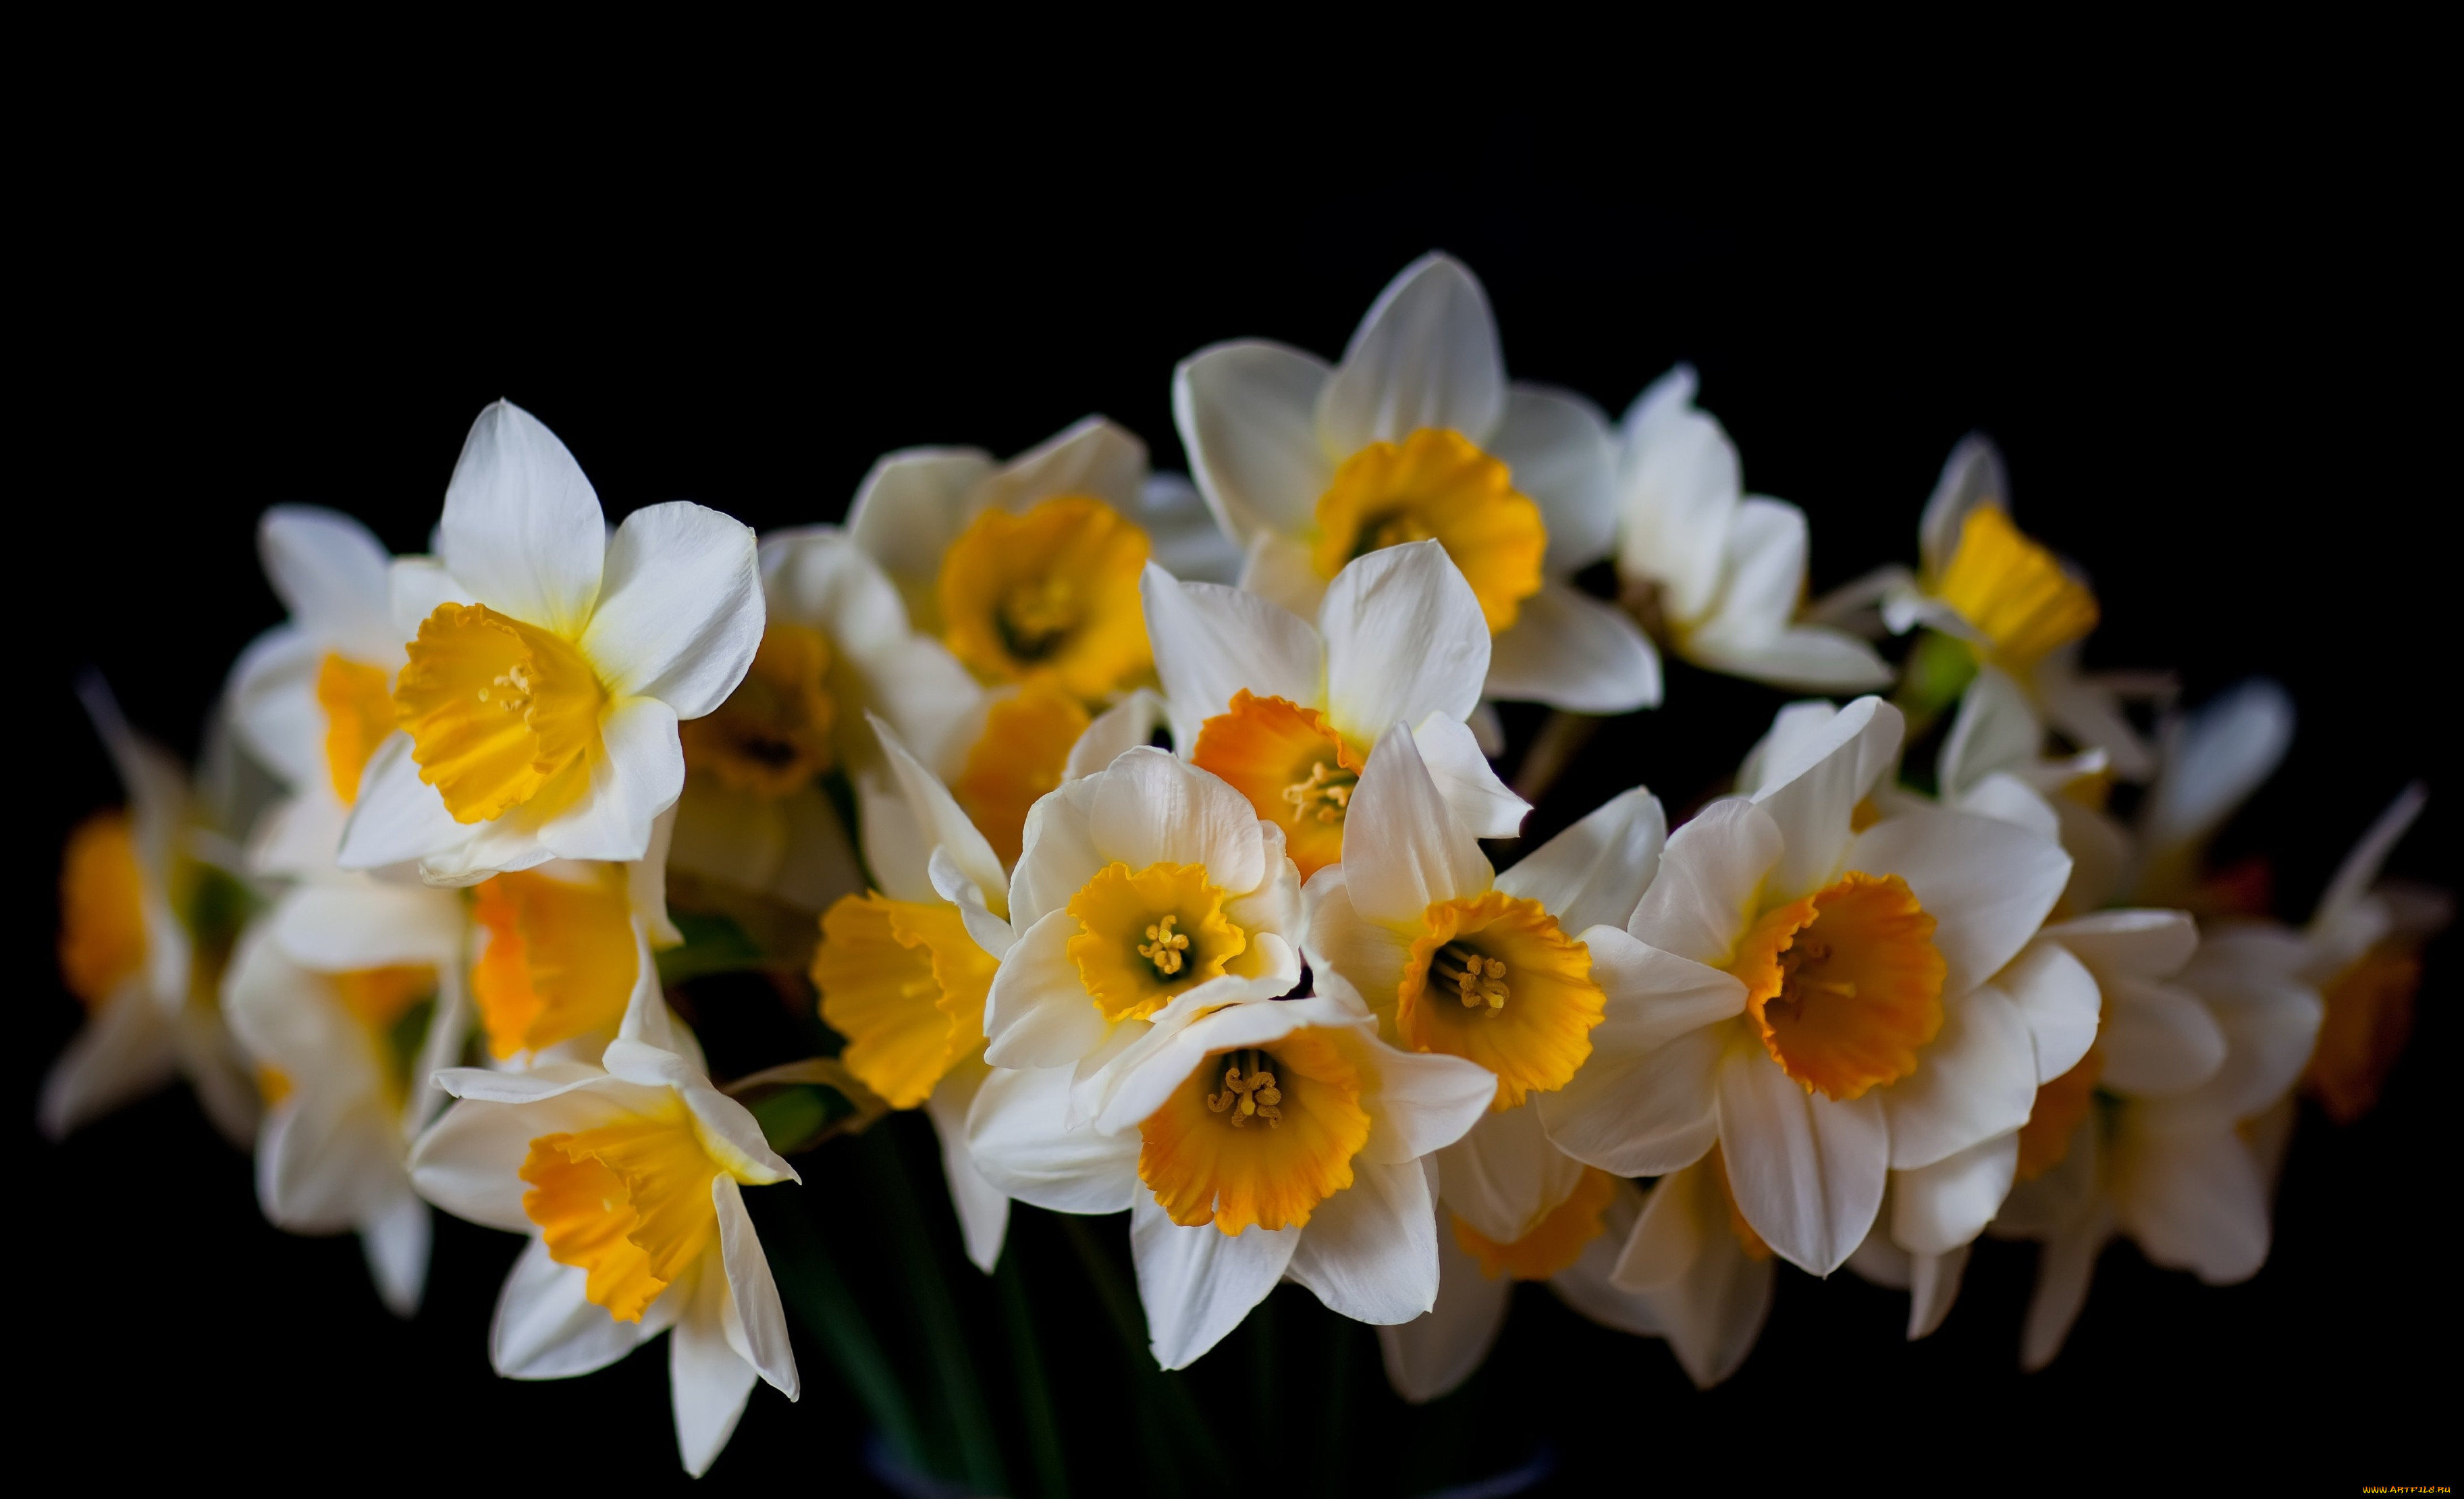 Нарцисс телефон. Лилия Данмора Нарцисс. Нарцисс спринг Сан. Нарцисс цветок белый. Нарциссы цветы букет.